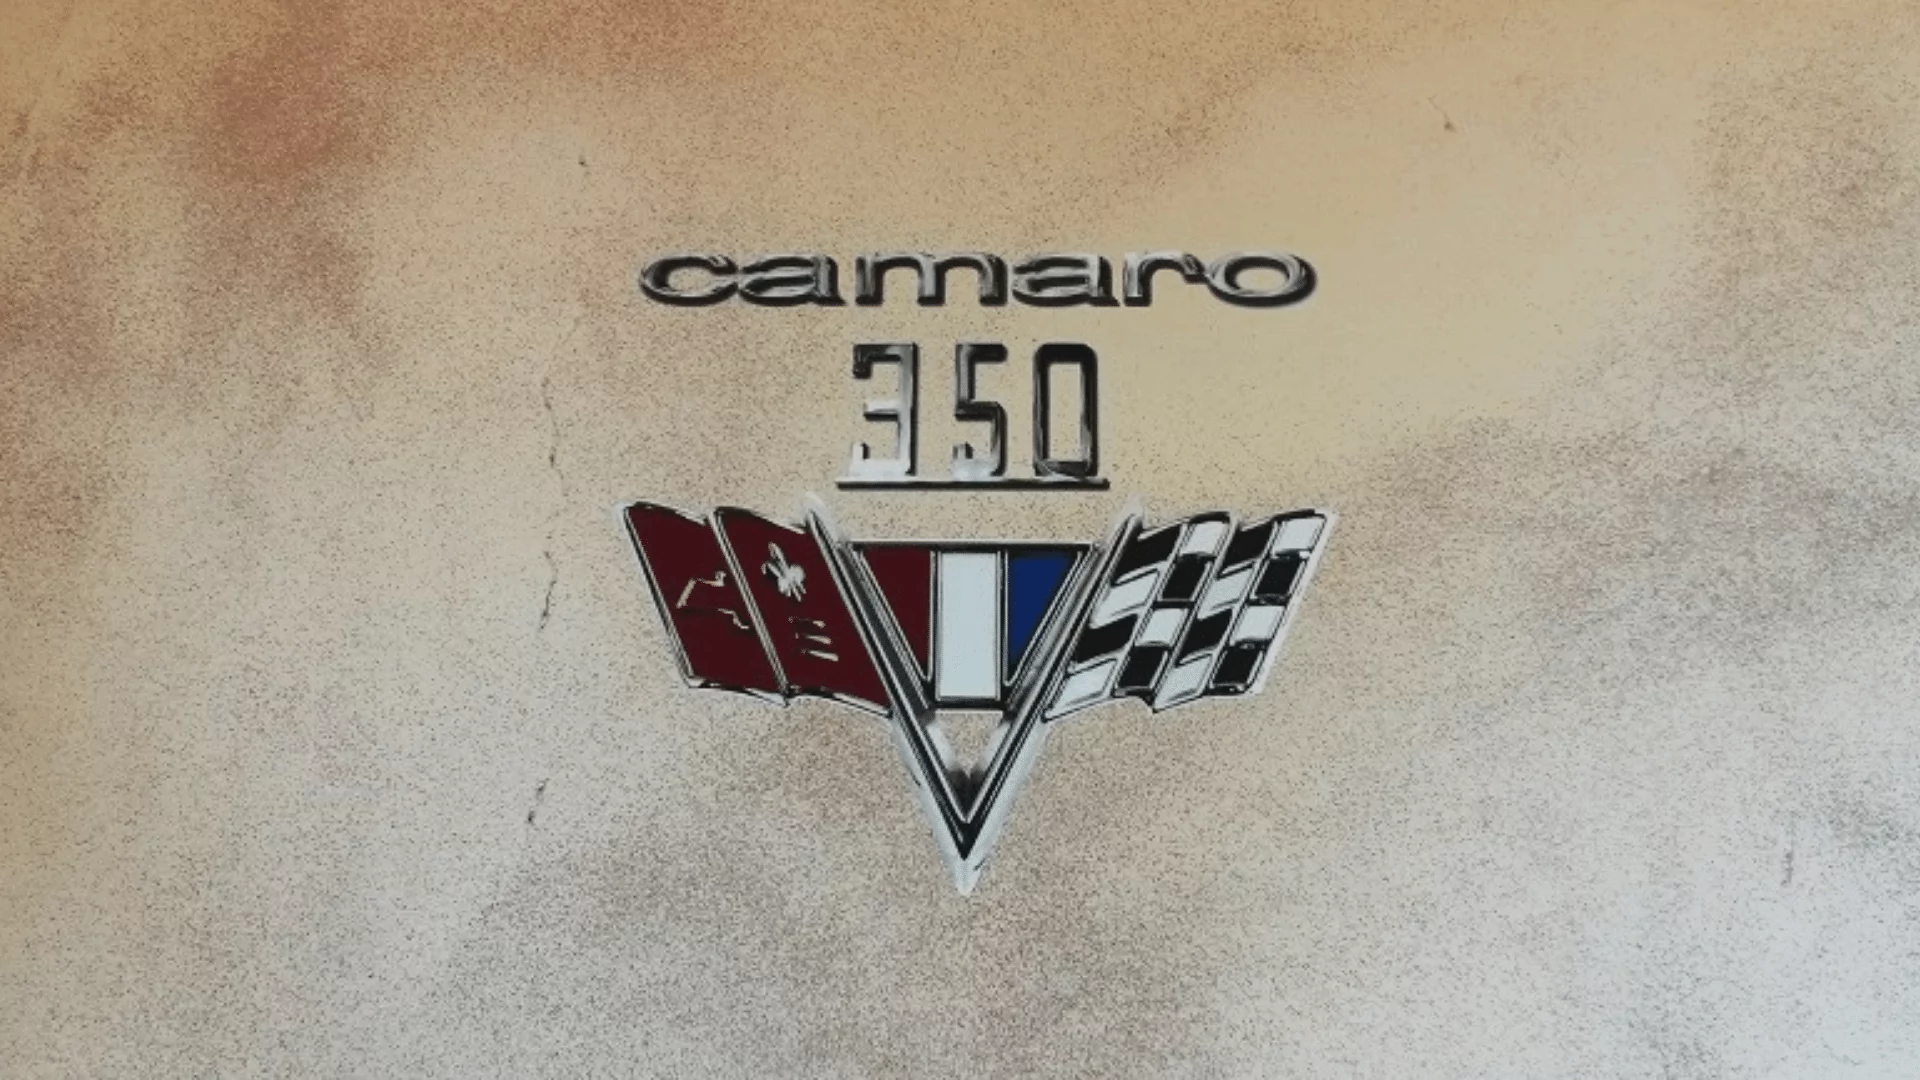 garage floors camaro 350 logo into floor